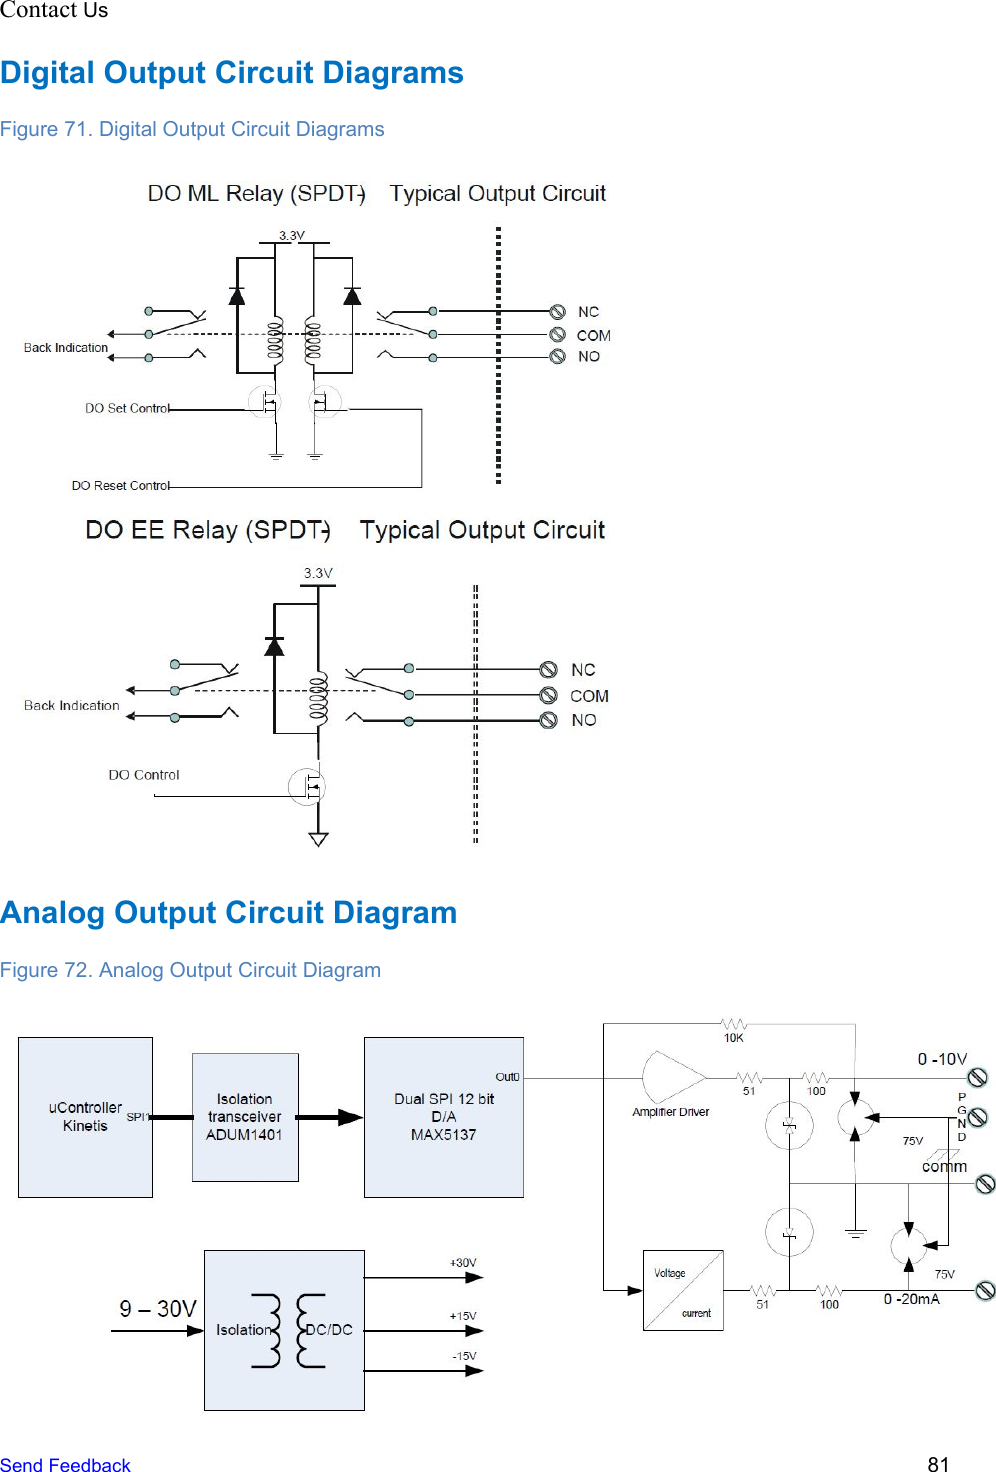 Contact Us Digital Output Circuit Diagrams Figure 71. Digital Output Circuit Diagrams  Analog Output Circuit Diagram Figure 72. Analog Output Circuit Diagram  Send Feedback  81 